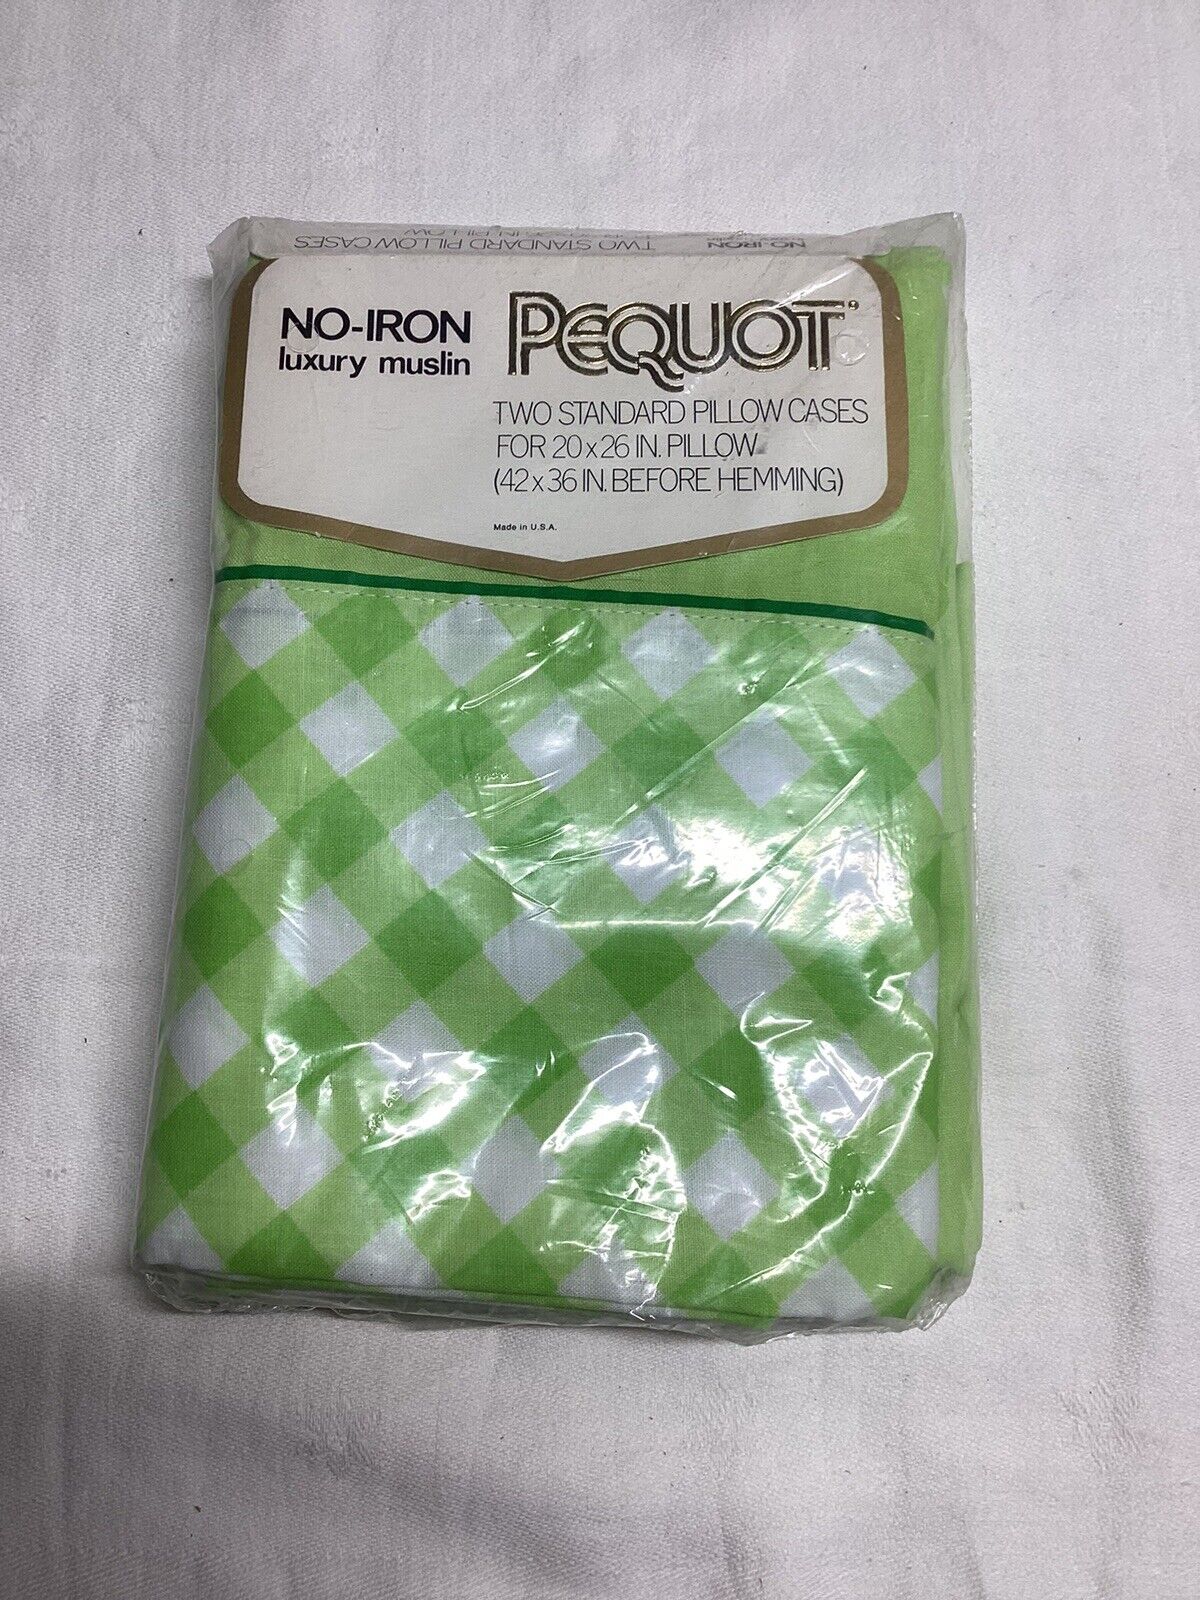 NOS Vintage Pequot Pillowcase Lime Green 50/50 Luxury Muslin